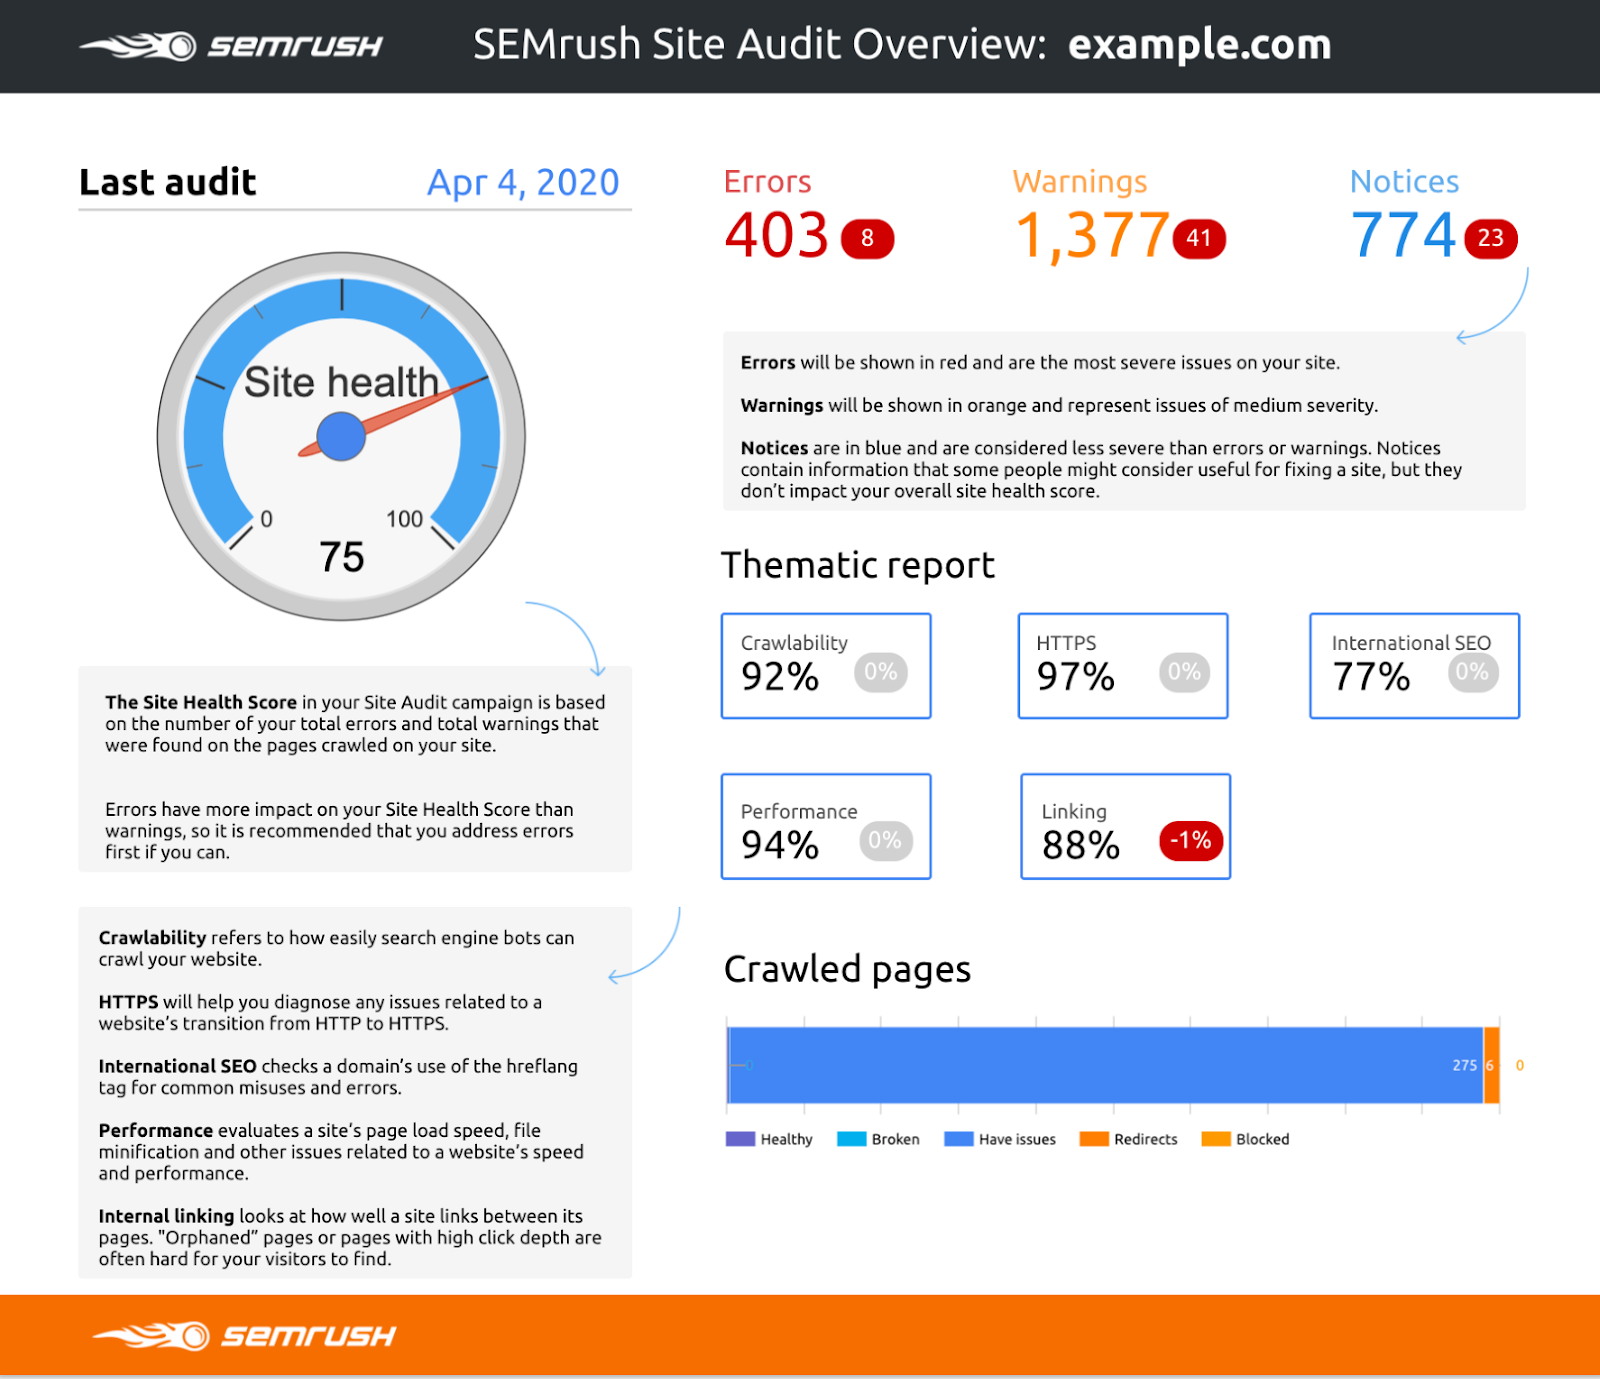 google-data-studio-template-a-complete-seo-report-by-semrush